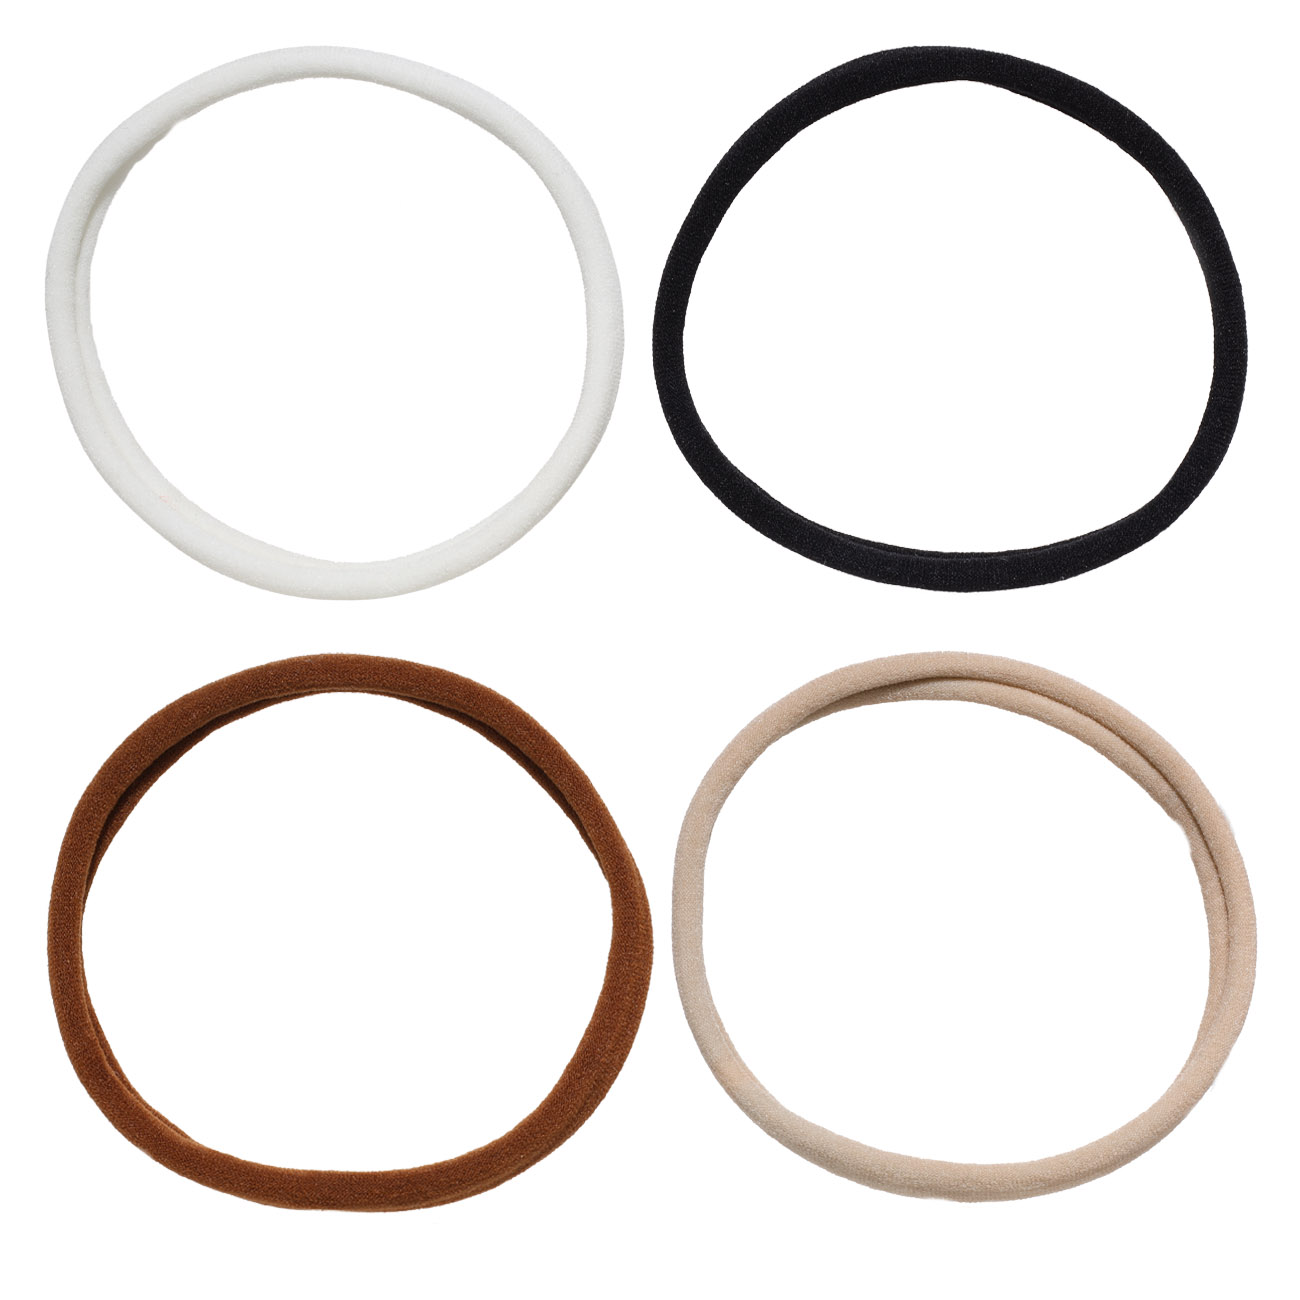 Elastic band for hair, 6 cm, 12 pcs, polyester, white / black / brown / beige, Basic изображение № 2